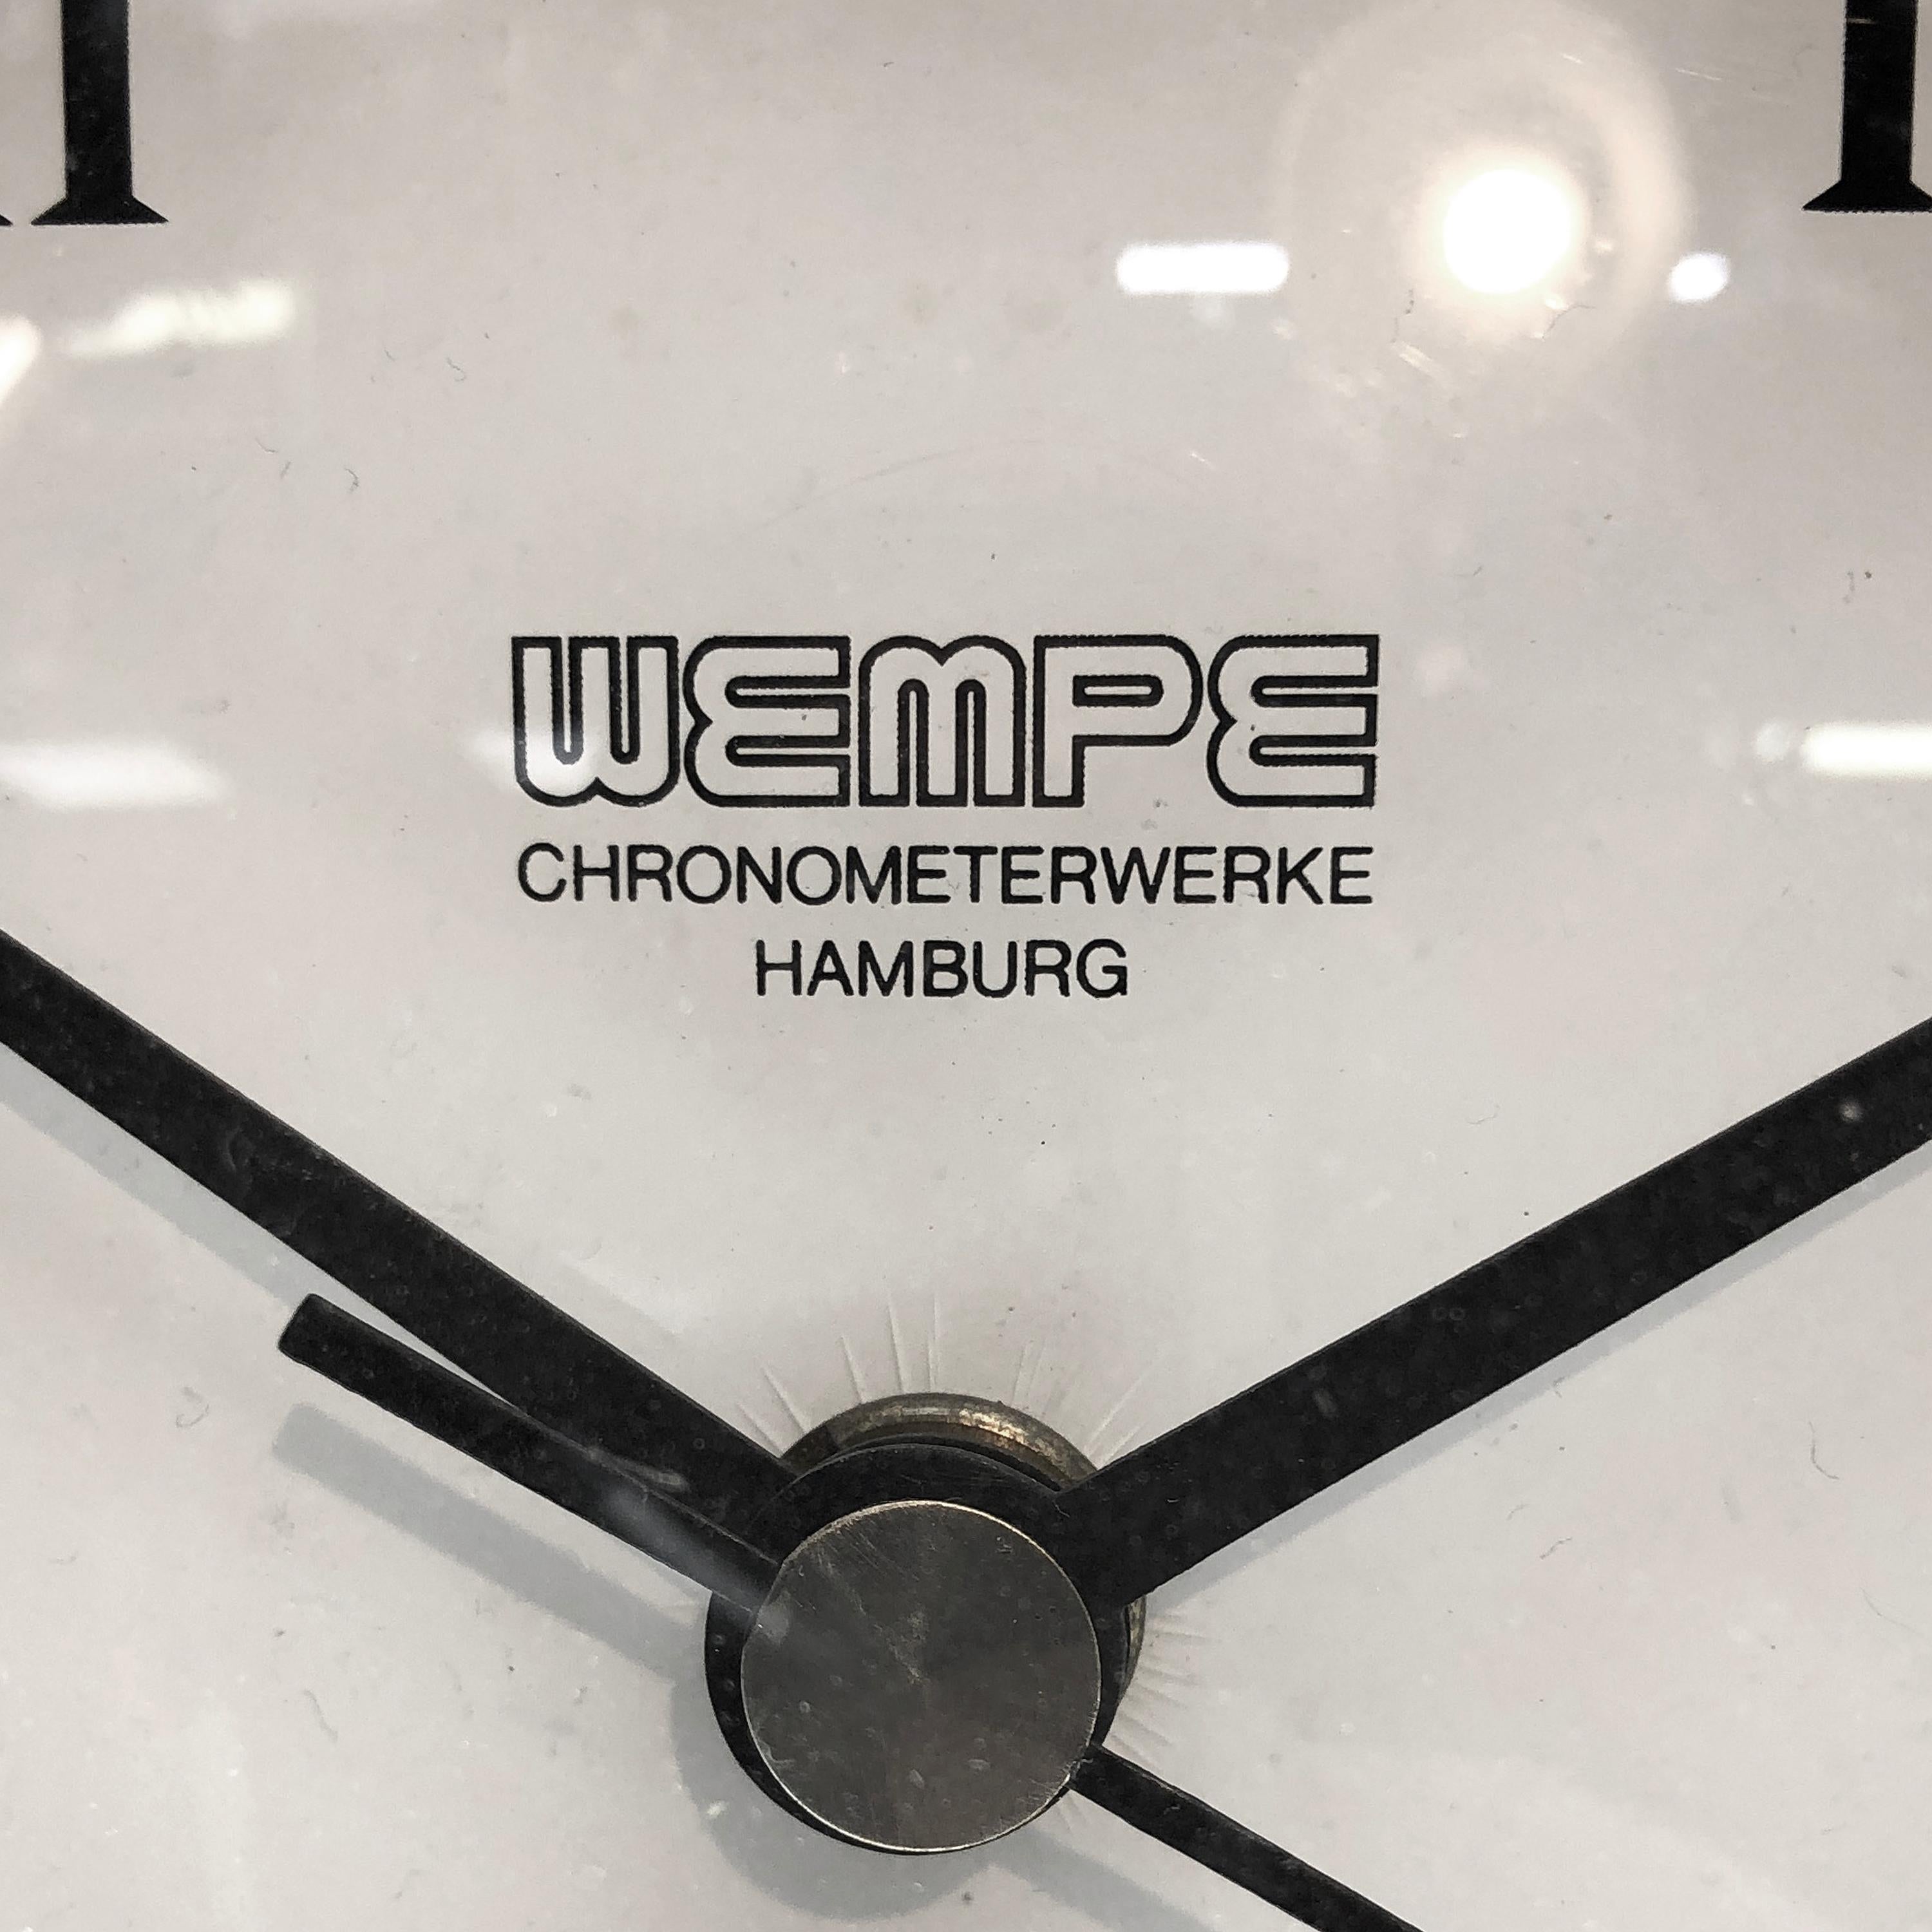 Late 20th Century 1980s German Chrome Circular Chronometer Quartz Wall Clock by Wempe